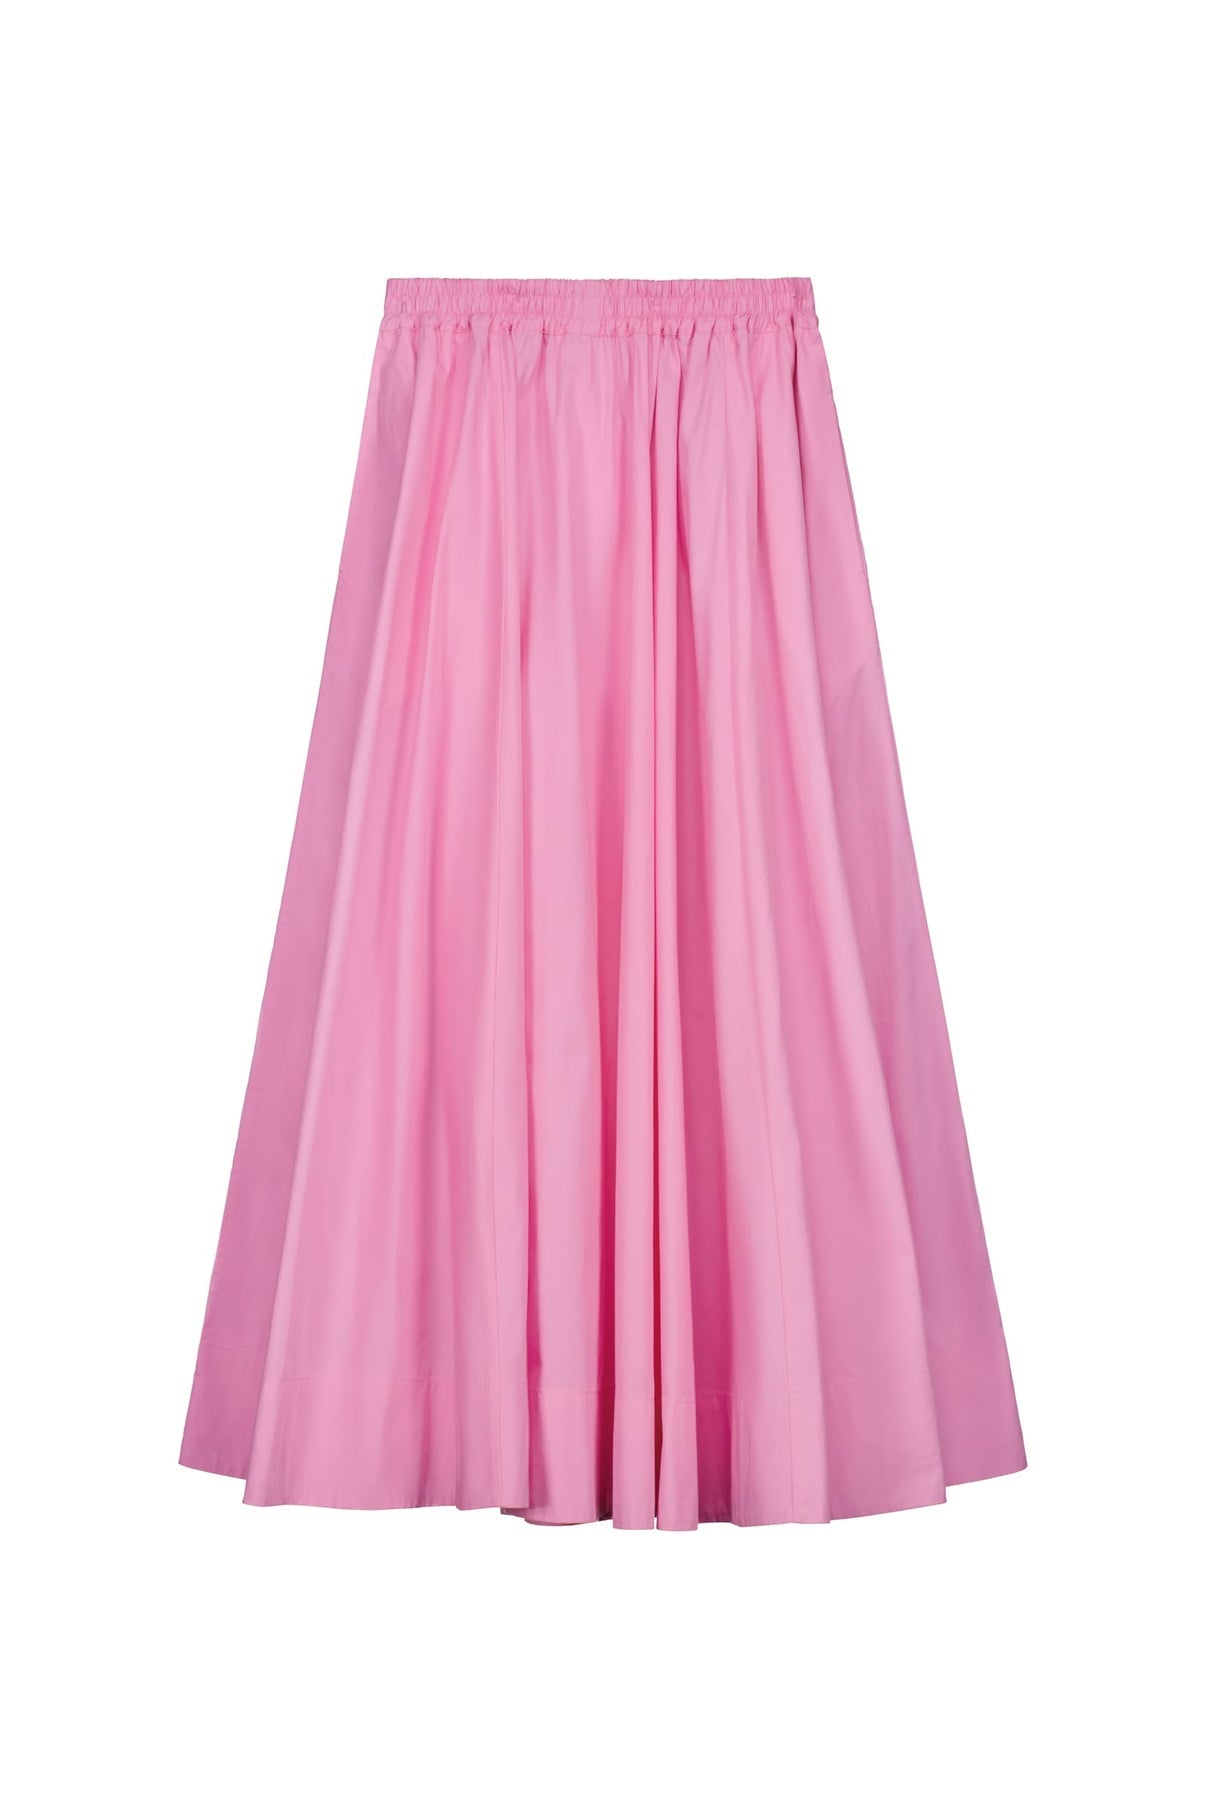 Moya Skirt - Candy Pink